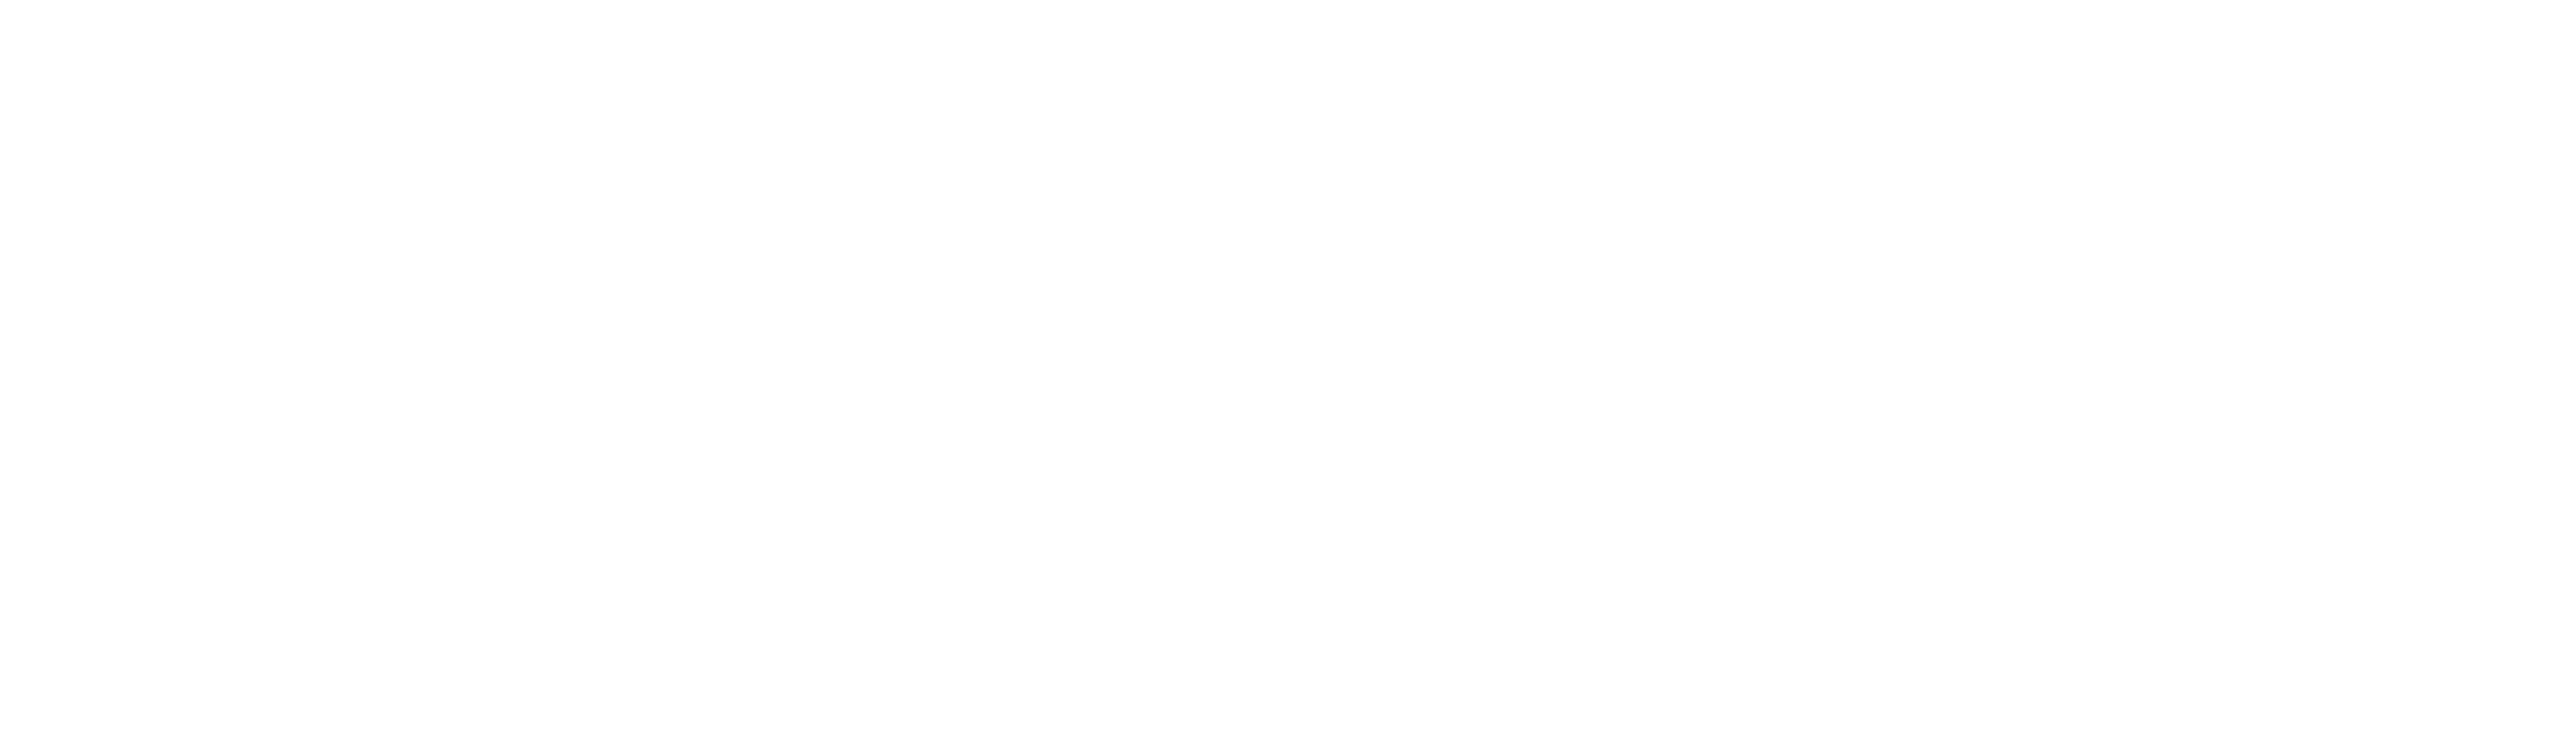 97 Minutes logo